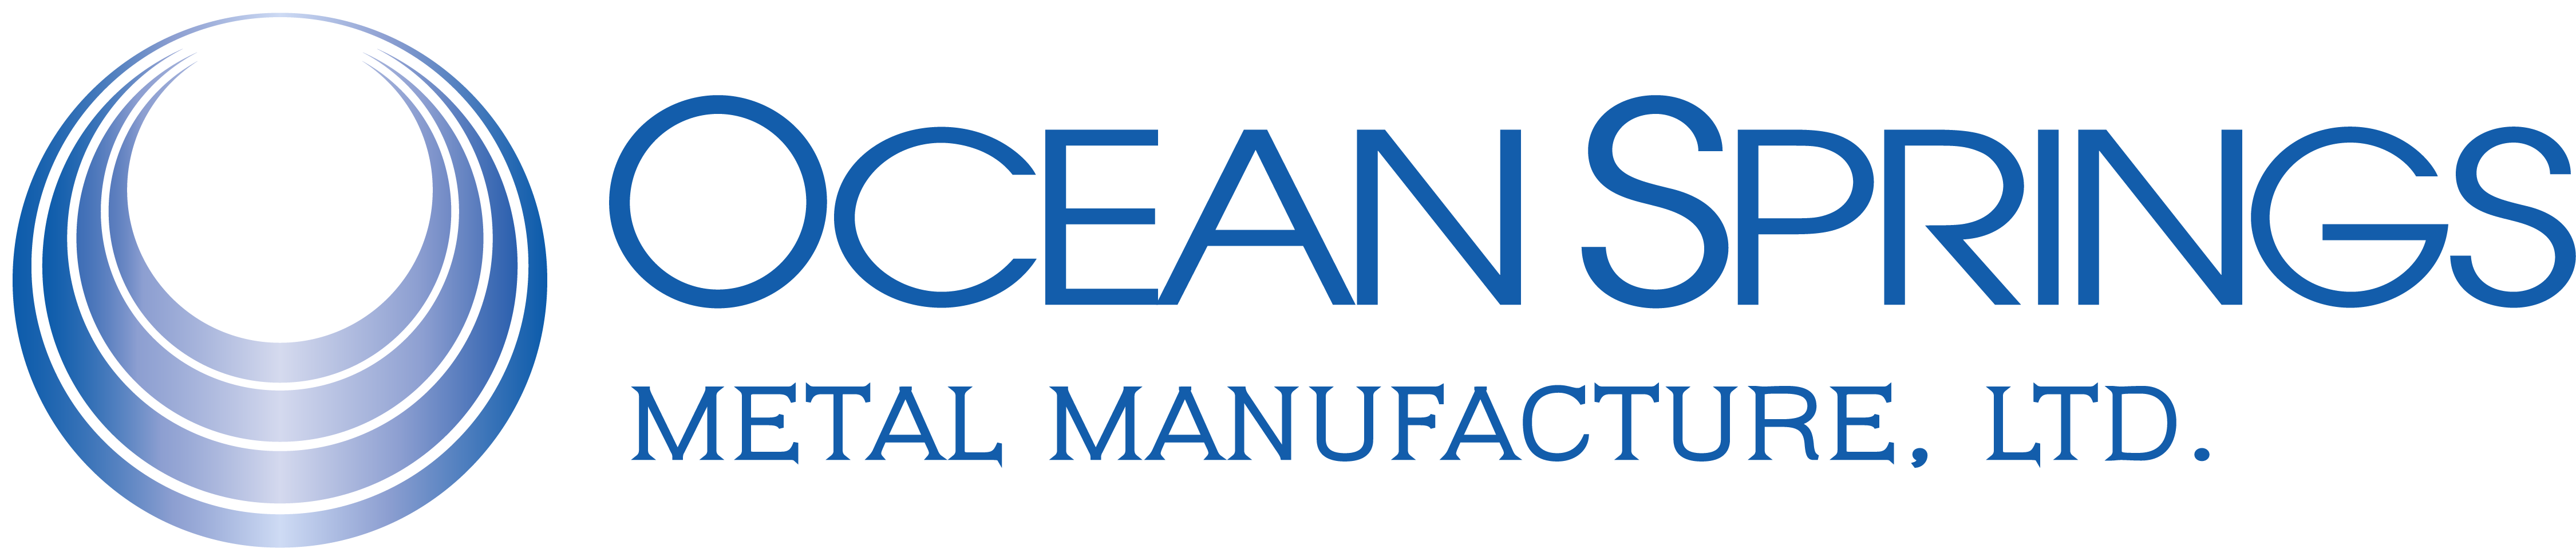 Metal Manufacturing | Ocean Springs Metal Manufacture